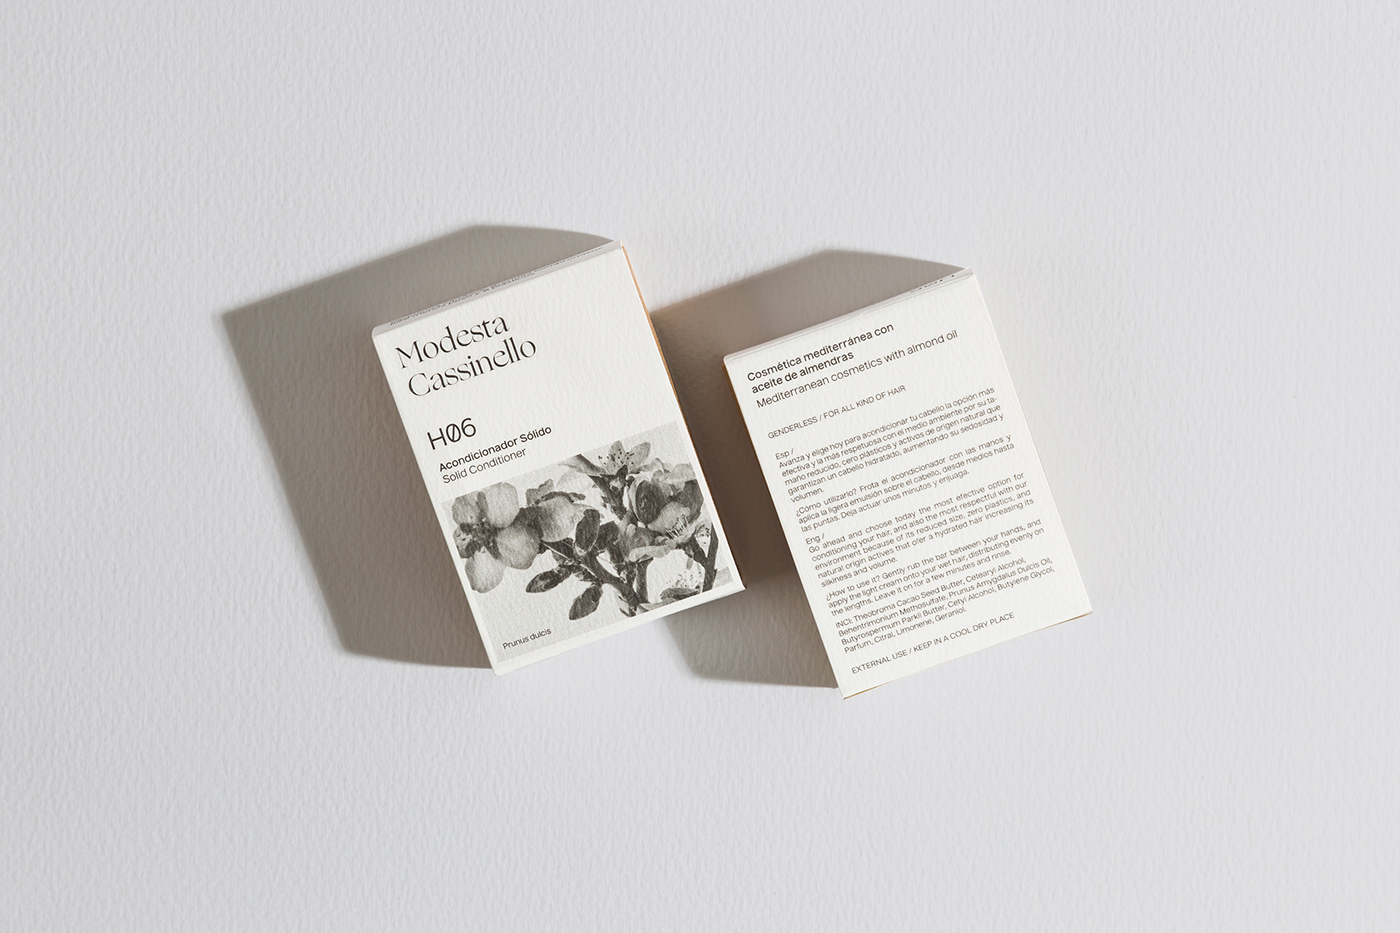 botanical cosmetics granada mediterranean Modesta Cassinello Packaging Plácida spain